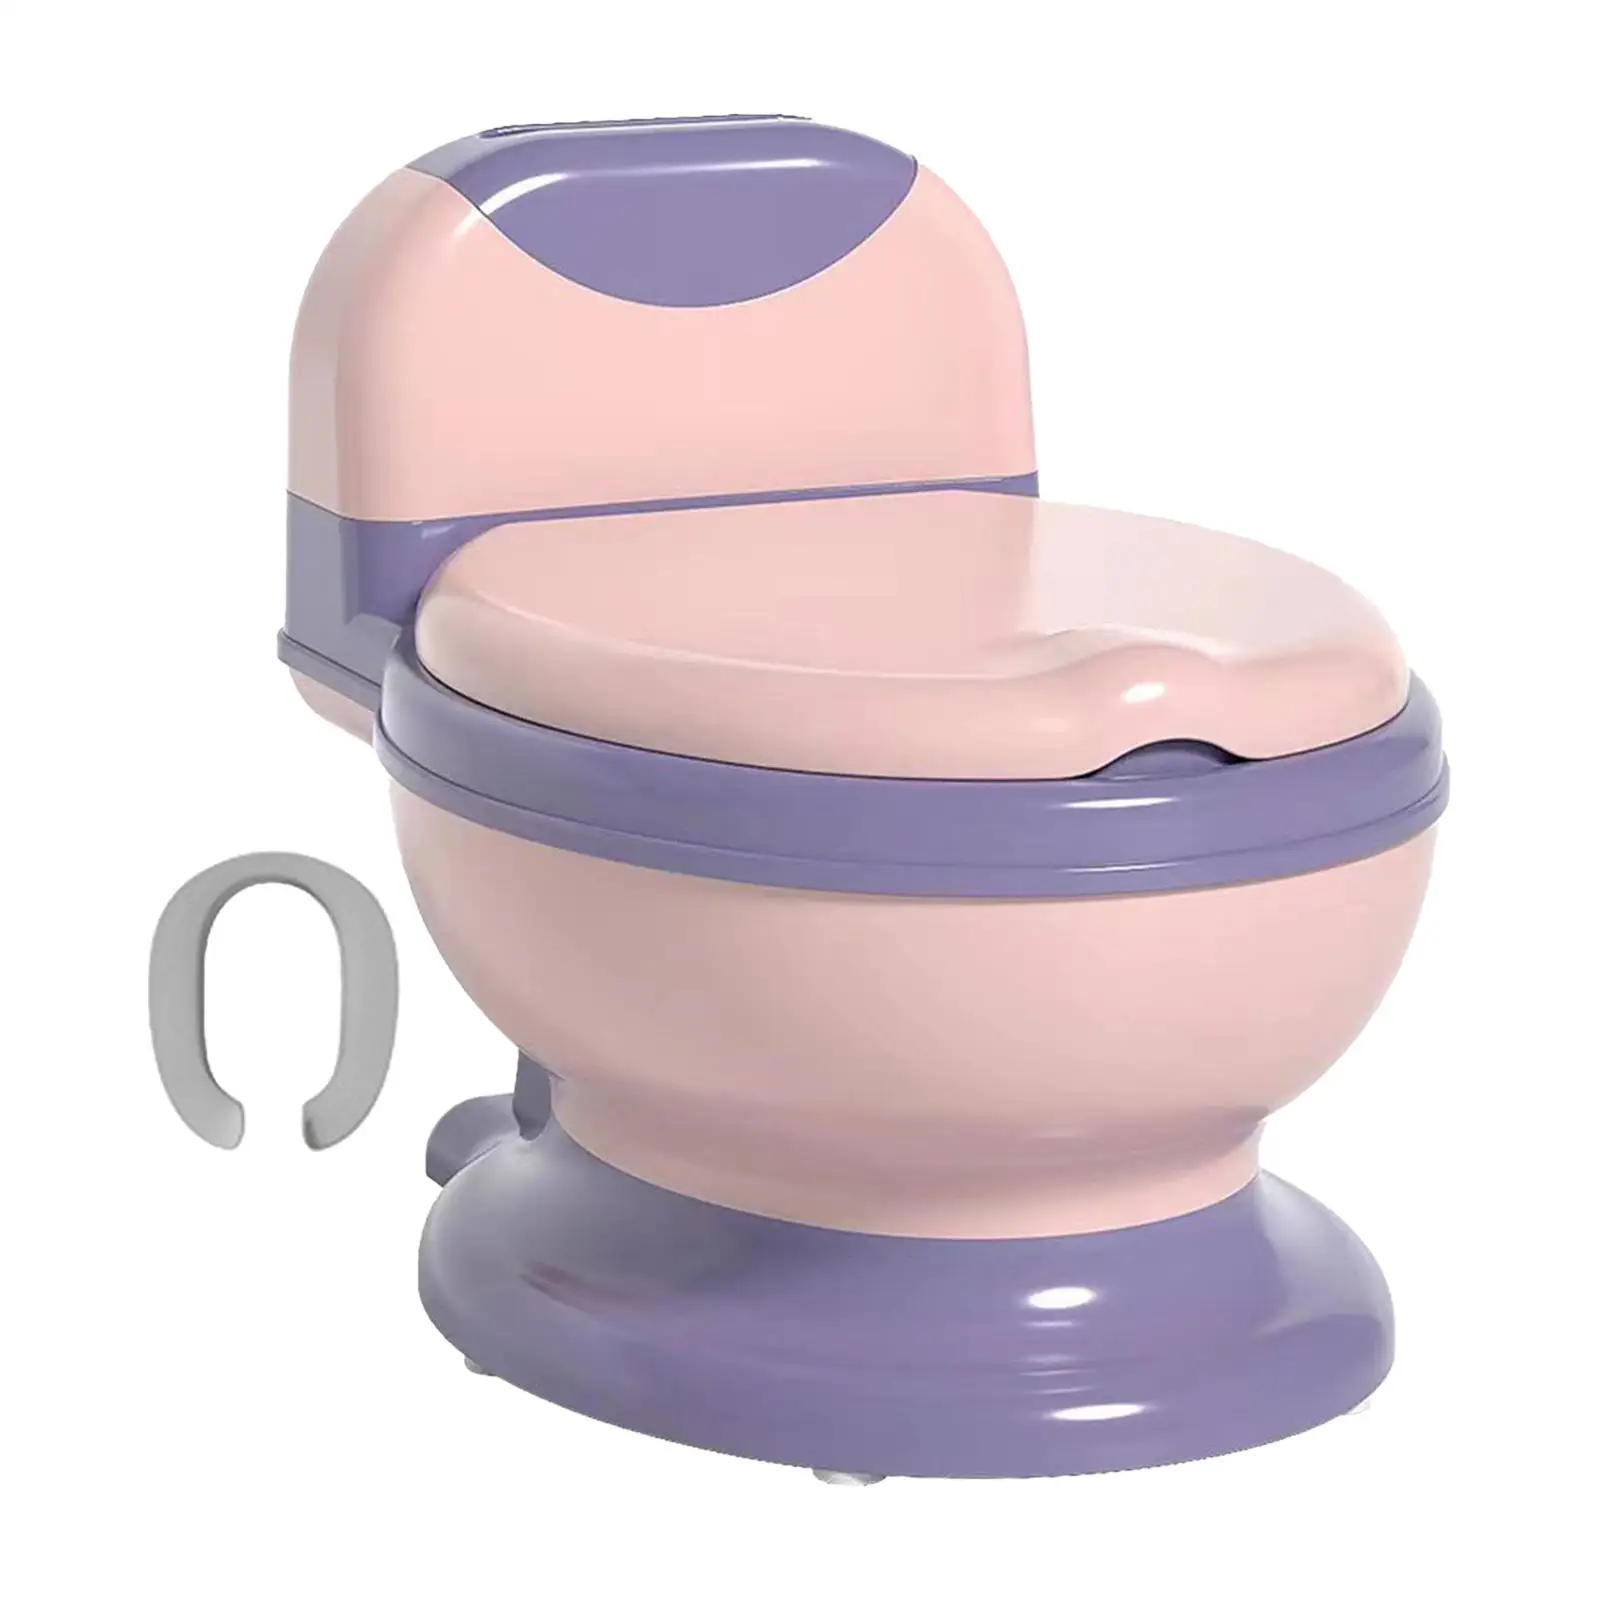 Potty Train Toilet Toilet Training Seat Potty Seat Potty Train Seat Realistic Toilet for Boys Girls Children Toddlers Baby